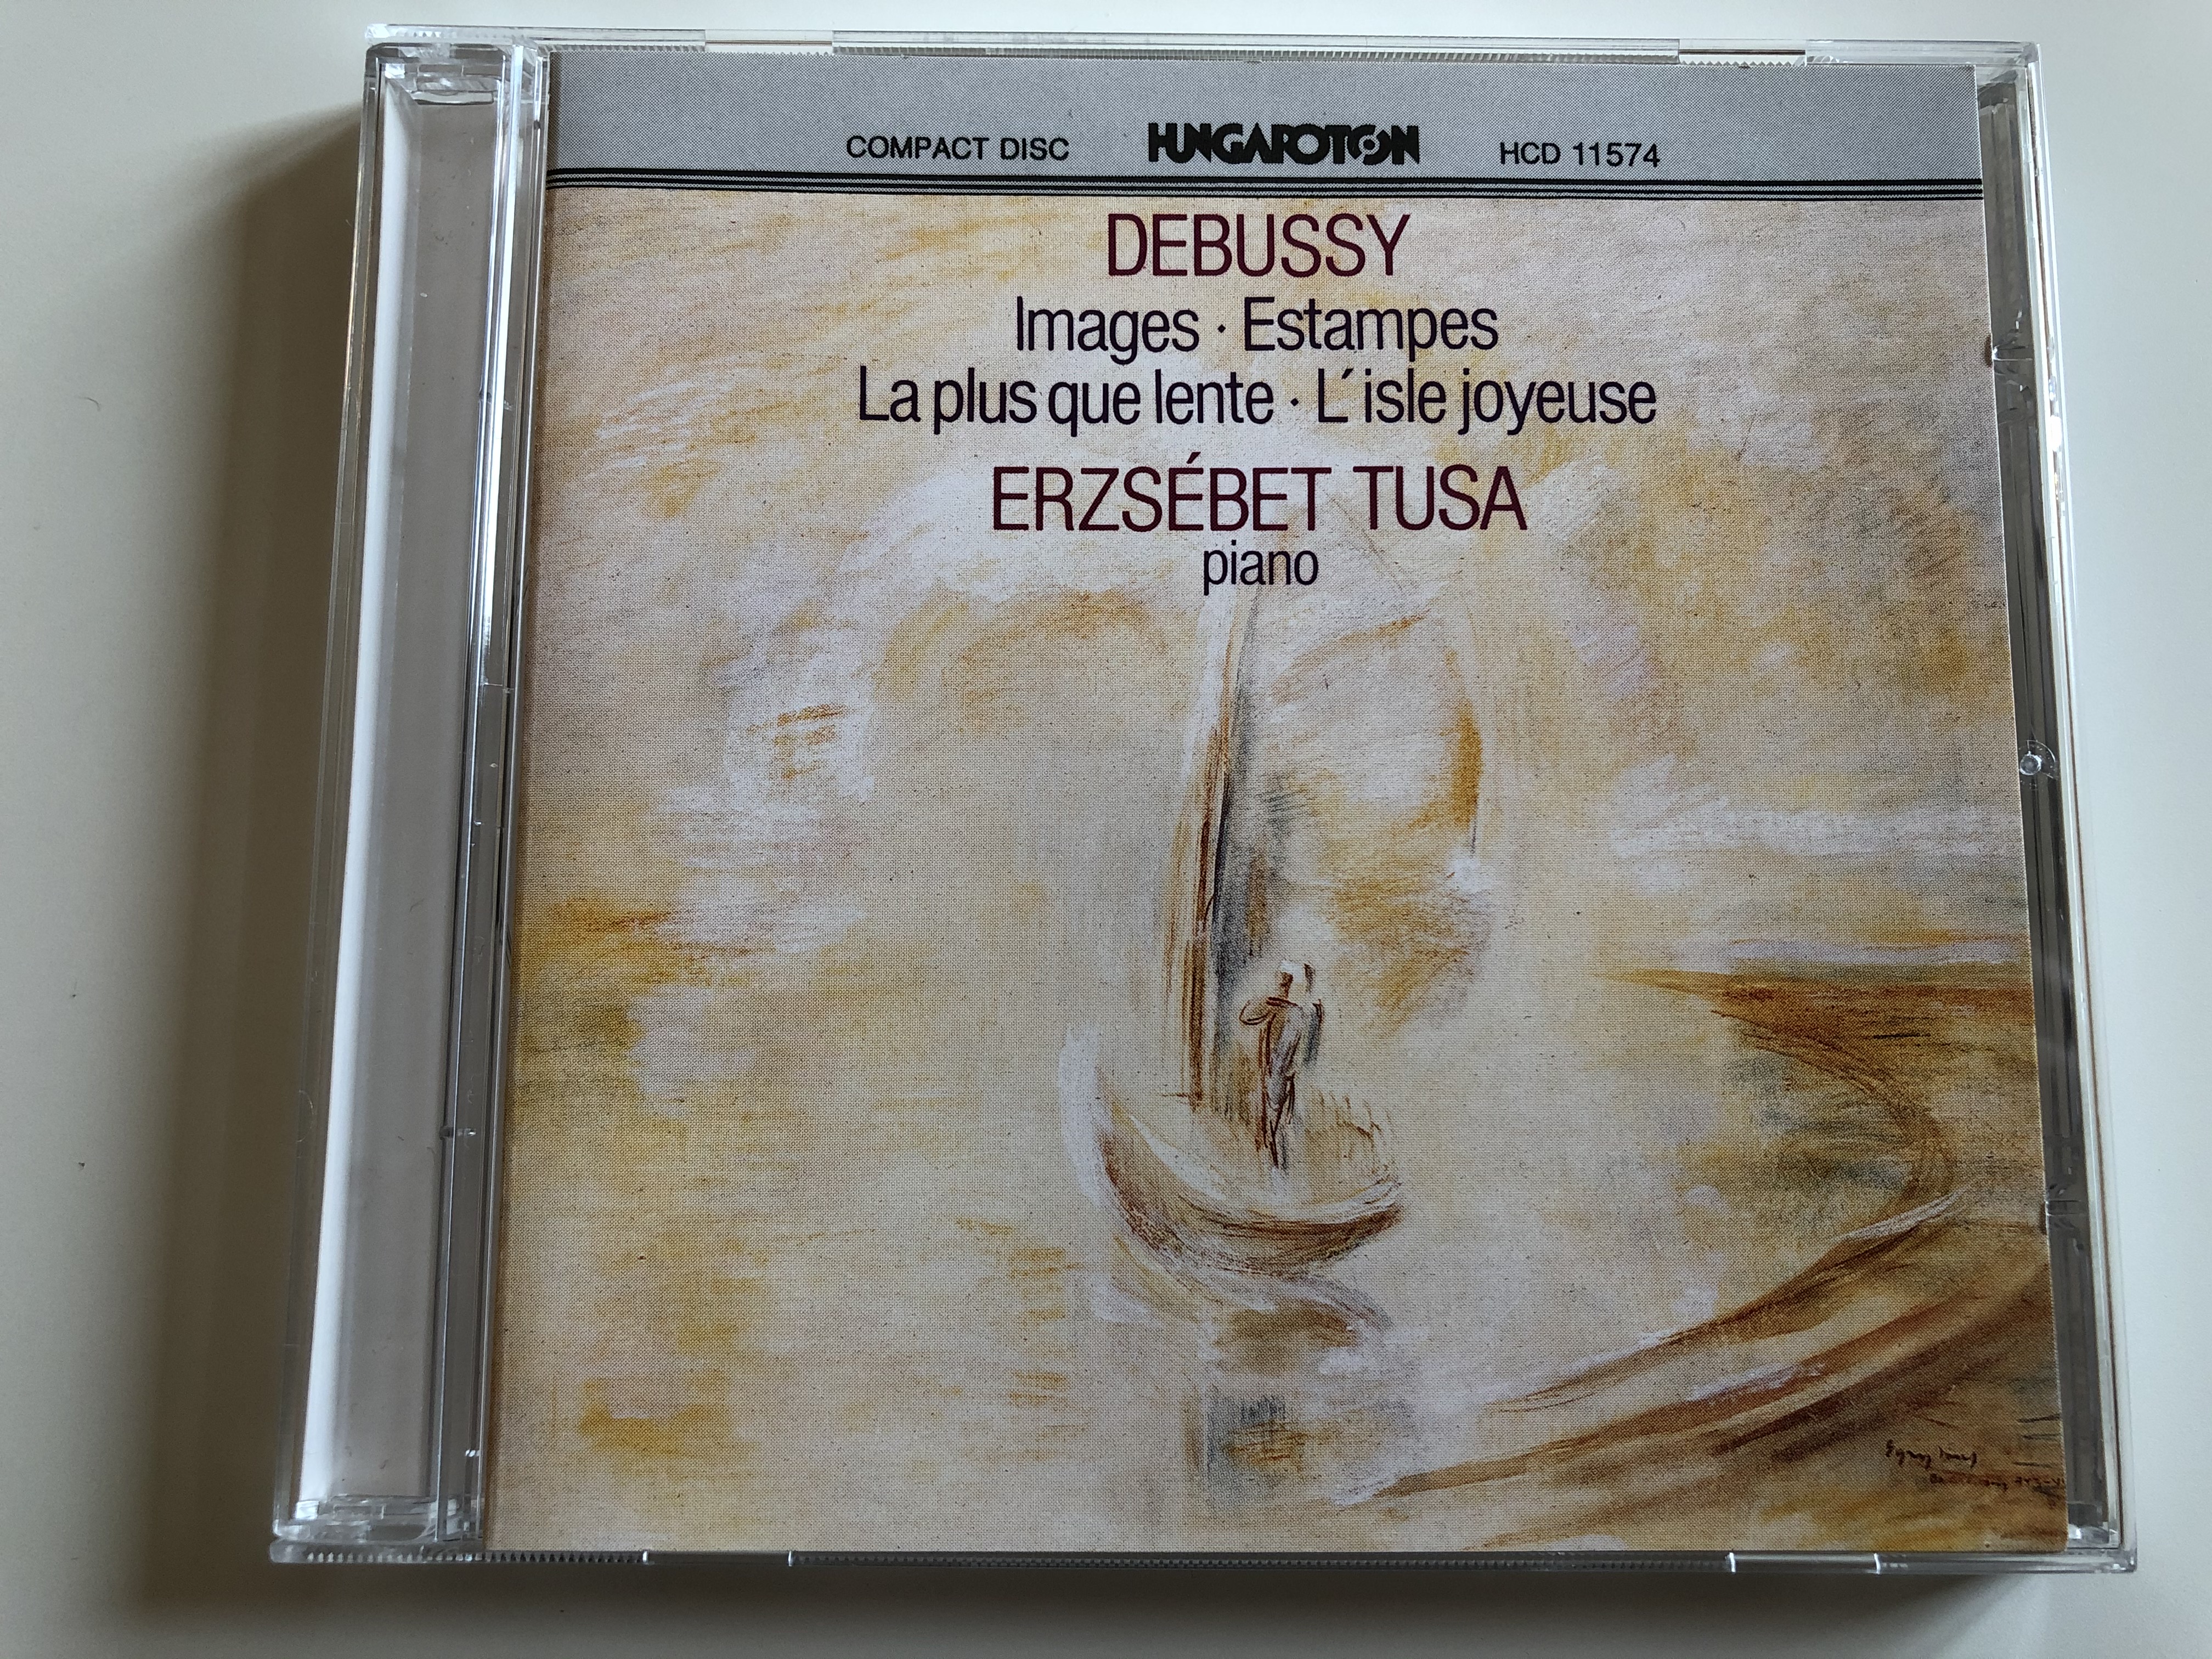 debussy-images-estampes-la-plus-que-lente-l-isle-joyeuse-erzs-bet-tusa-piano-hungaroton-audio-cd-1993-stereo-hcd-11574-1-.jpg